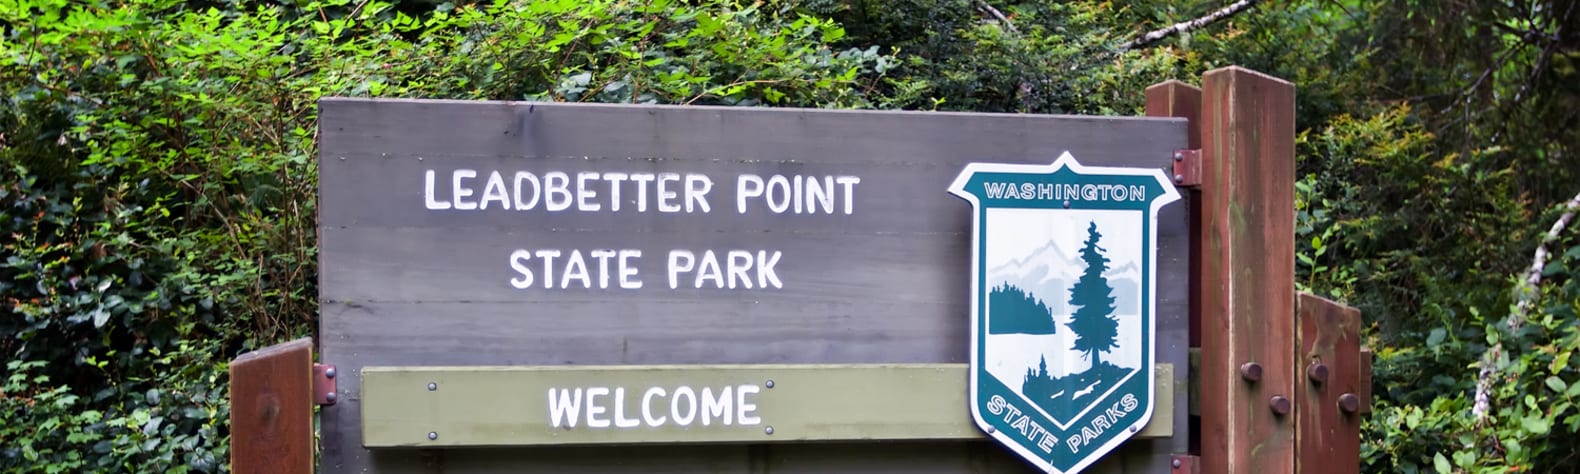 Leadbetter Point State Park